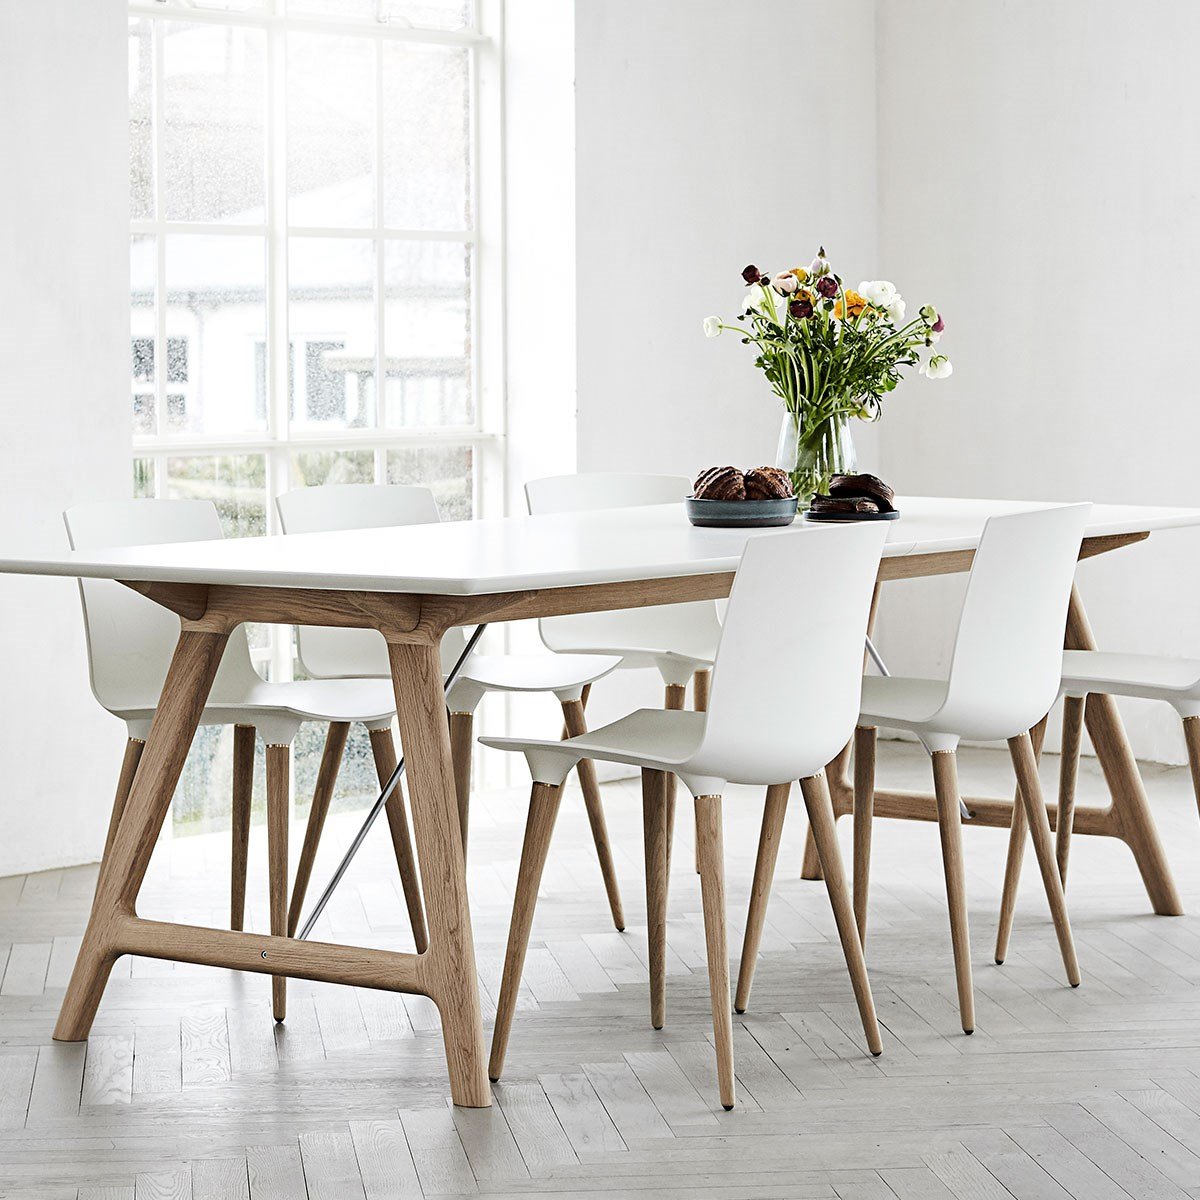 Andersen Furniture T7 utdragbart bordvitt laminat, tvålad ek, 220 cm